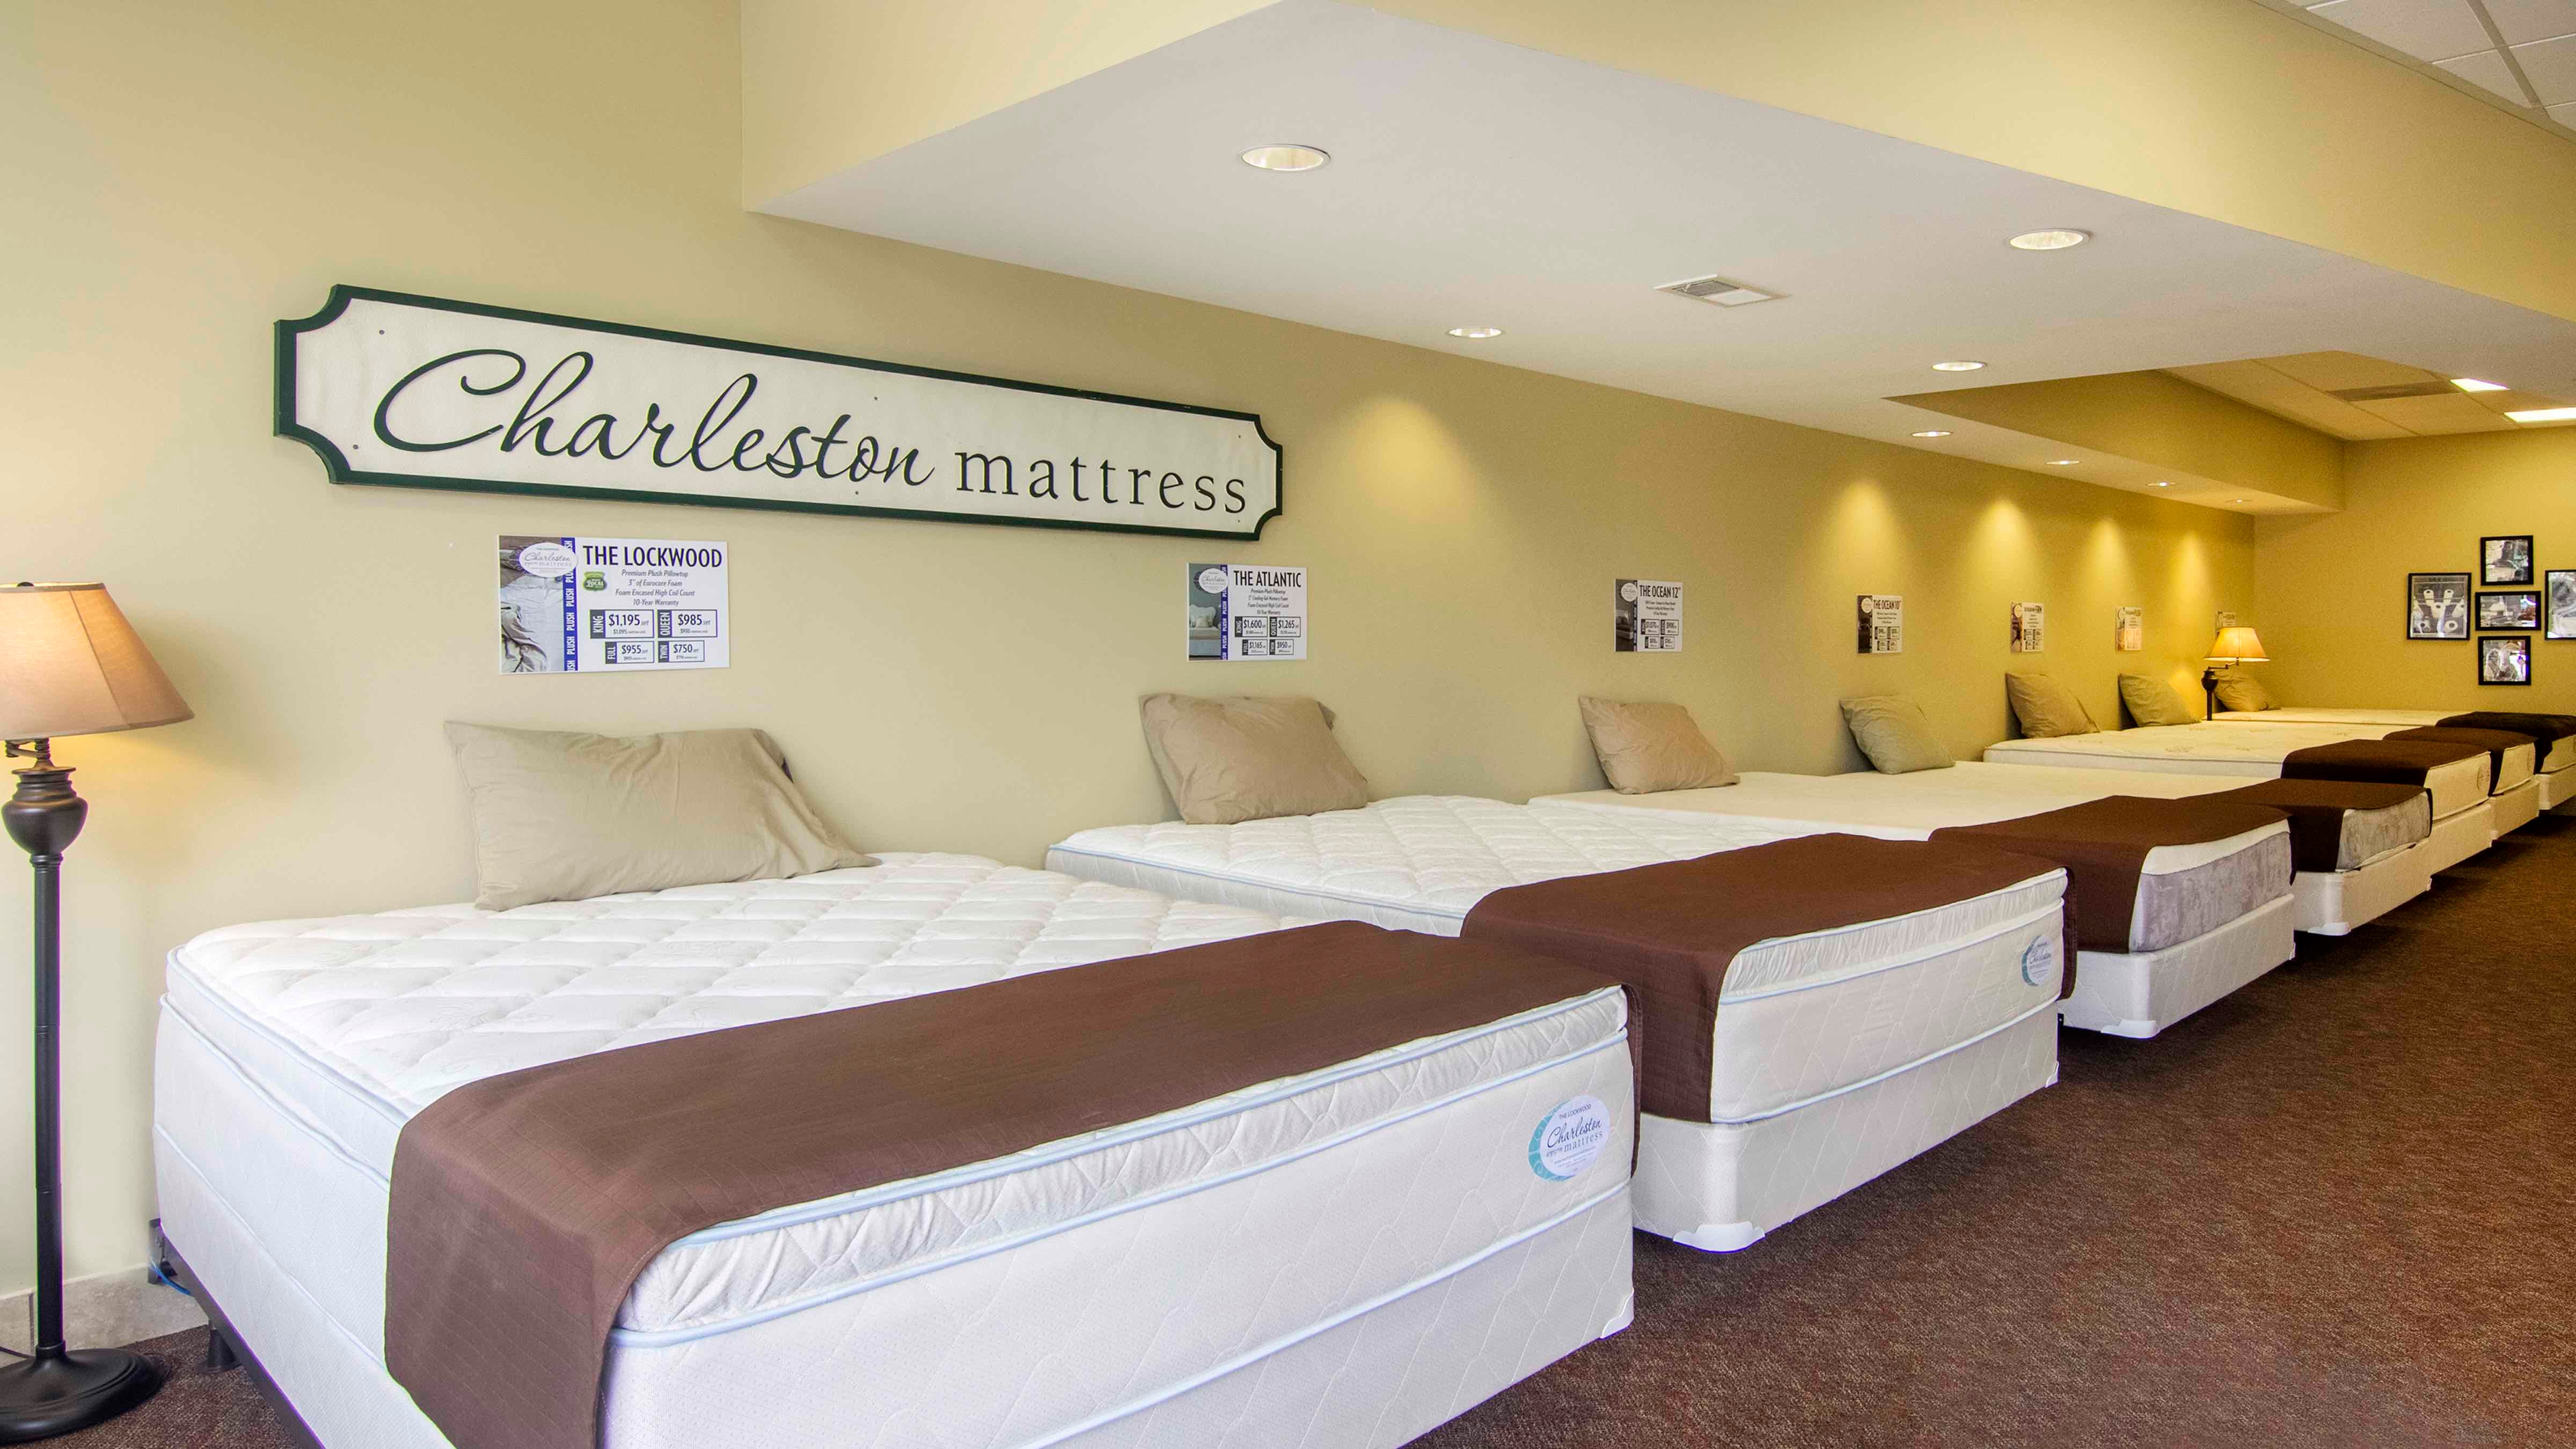 mattress for sale charleston sc